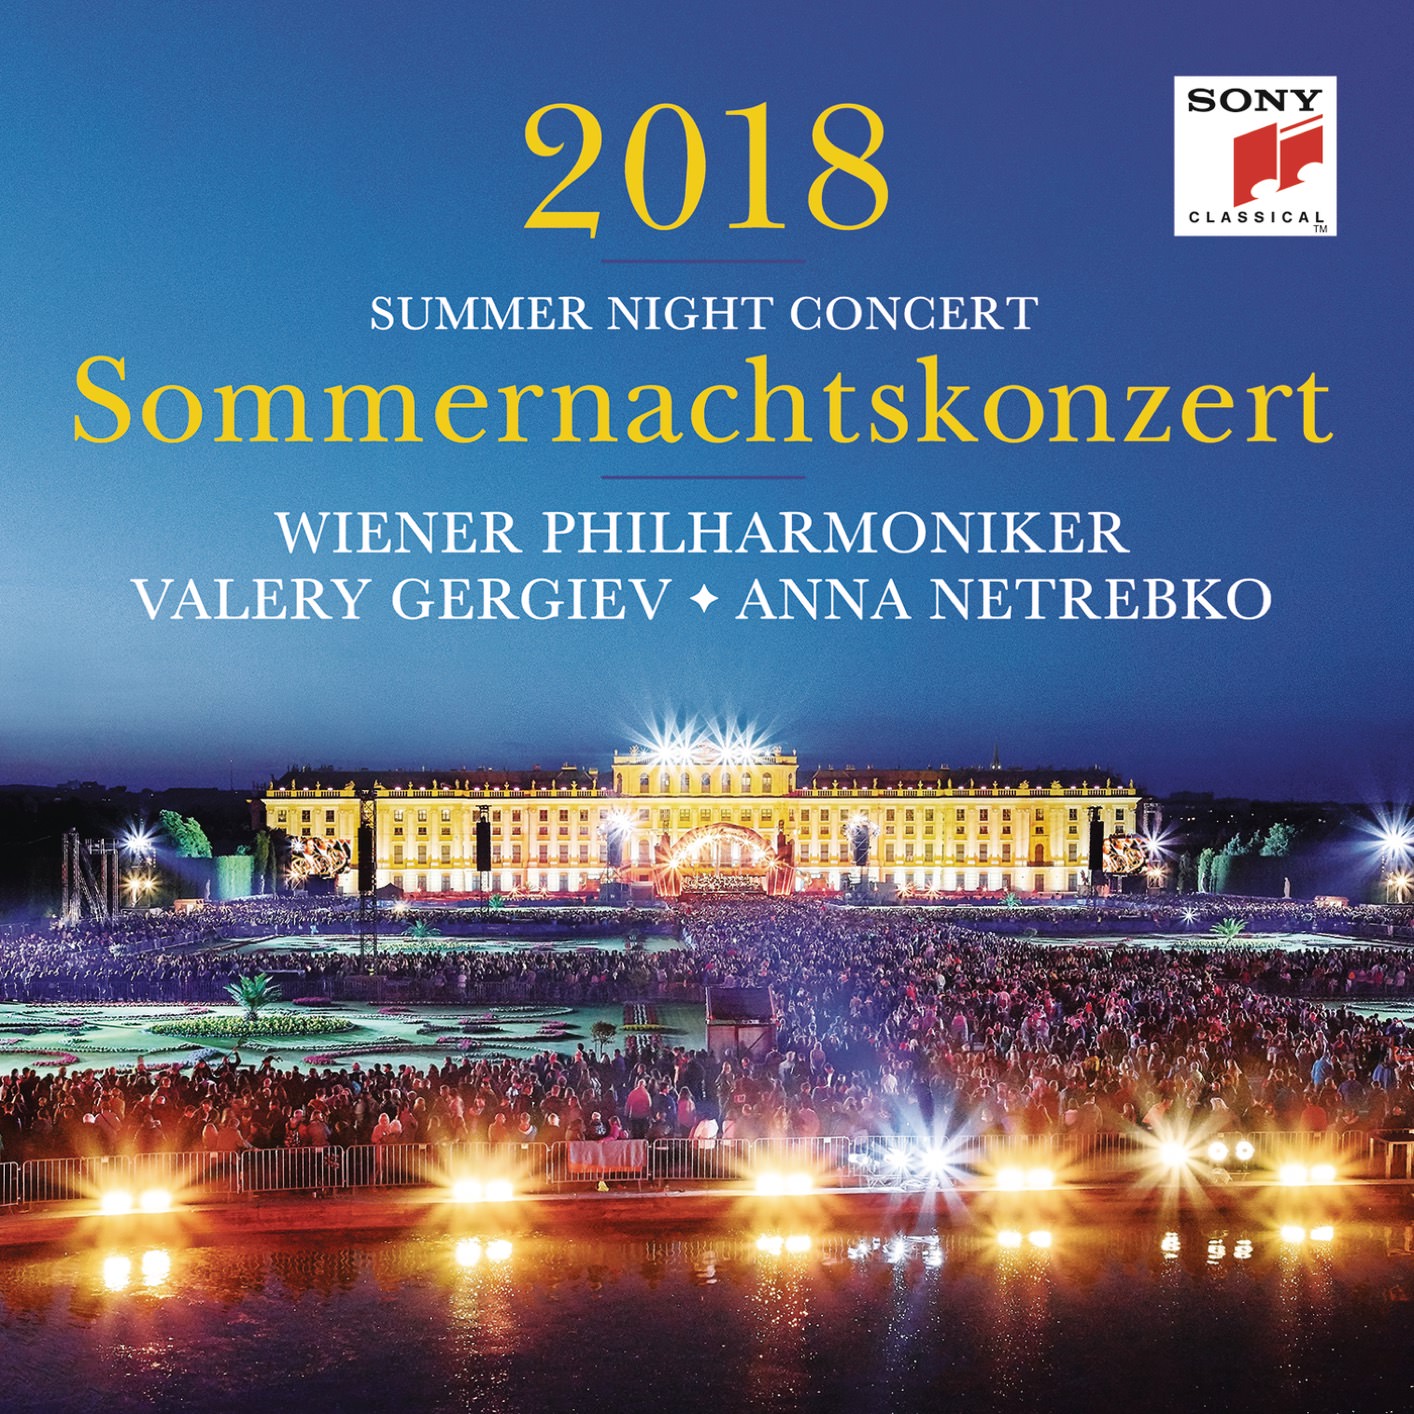 Valery Gergiev & Wiener Philharmoniker - Sommernachtskonzert 2018 / Summer Night Concert 2018 (2018) [FLAC 24bit/96kHz]